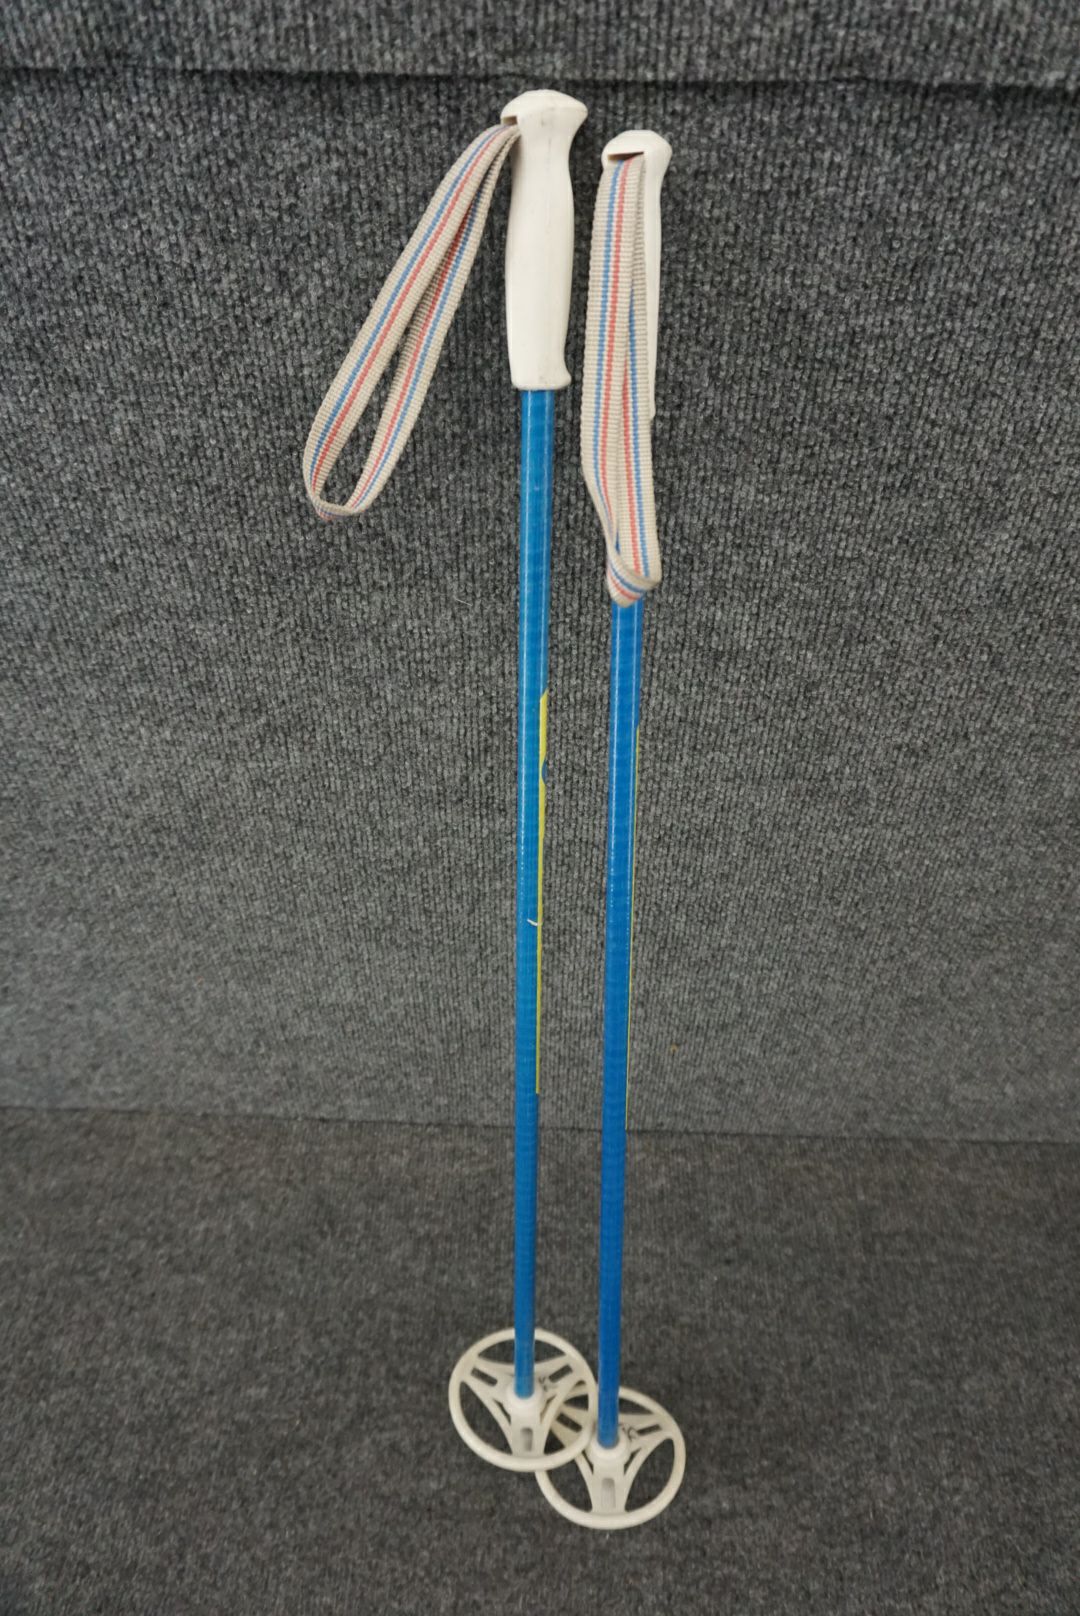 Edsbyn Length 80 cm/31.5" Cross Country Ski Poles